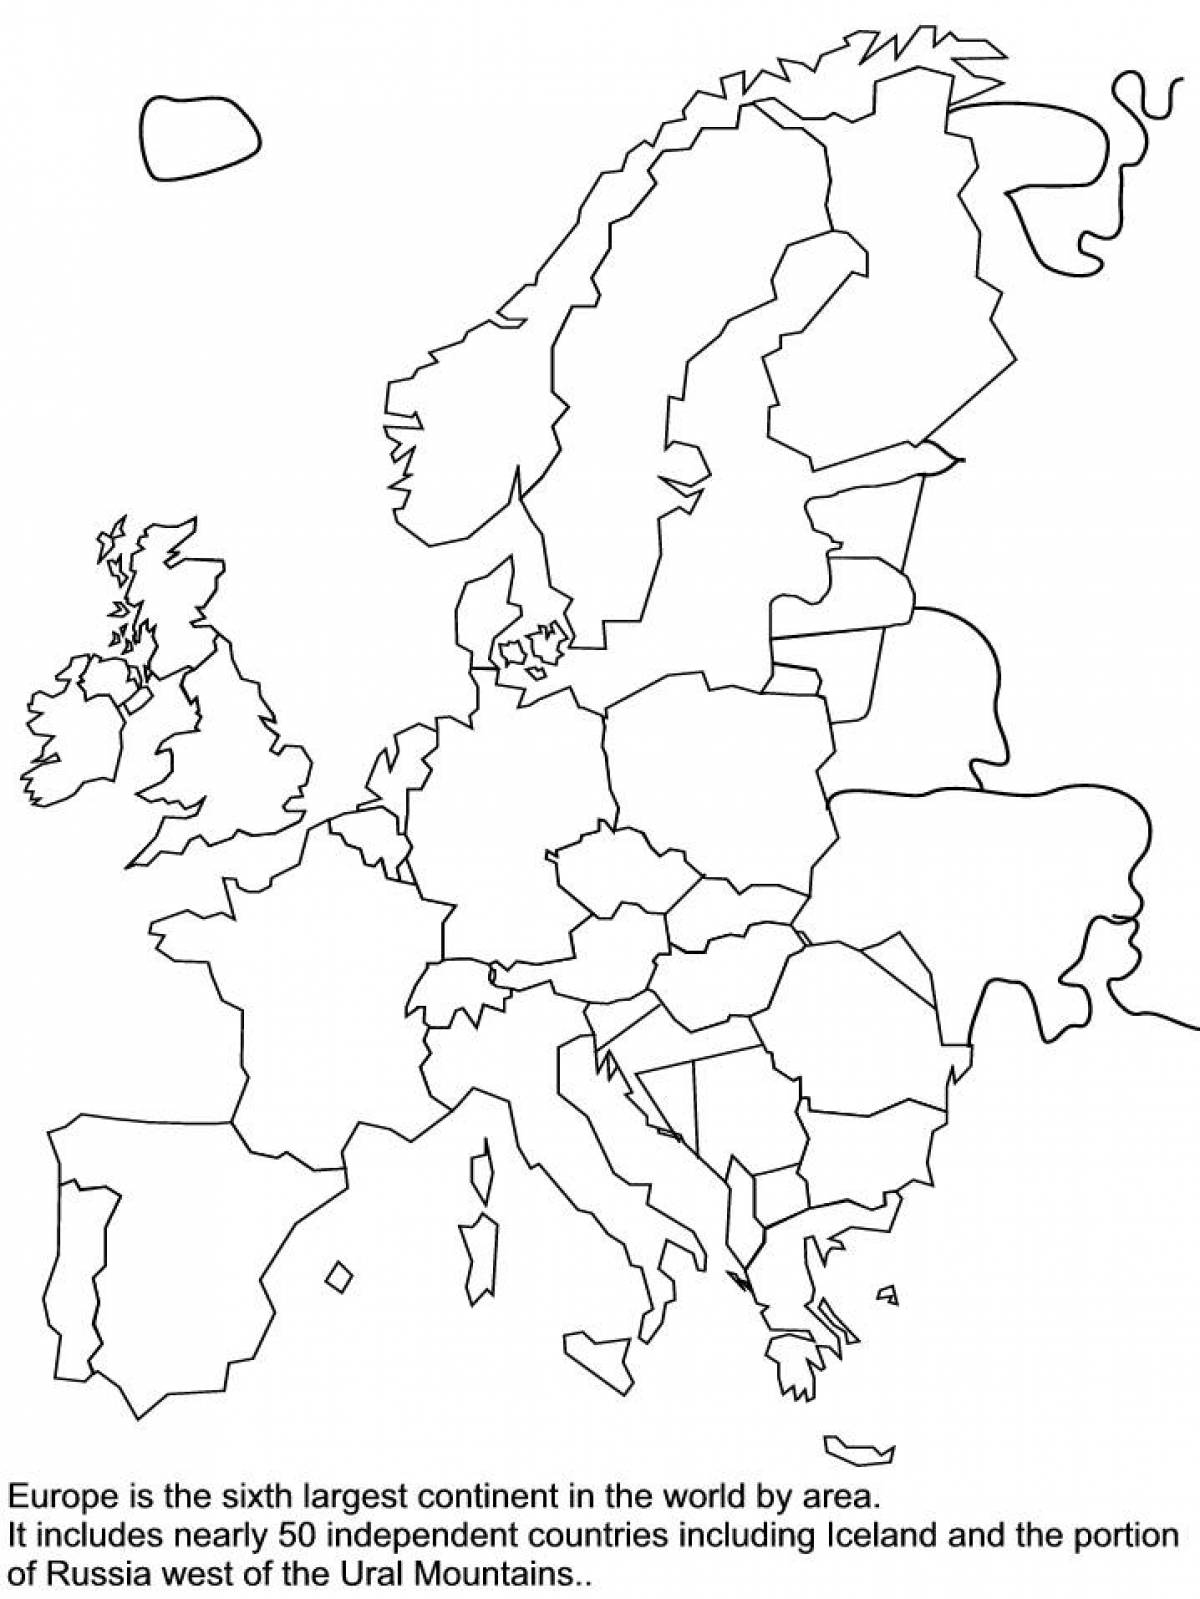 A striking map of europe